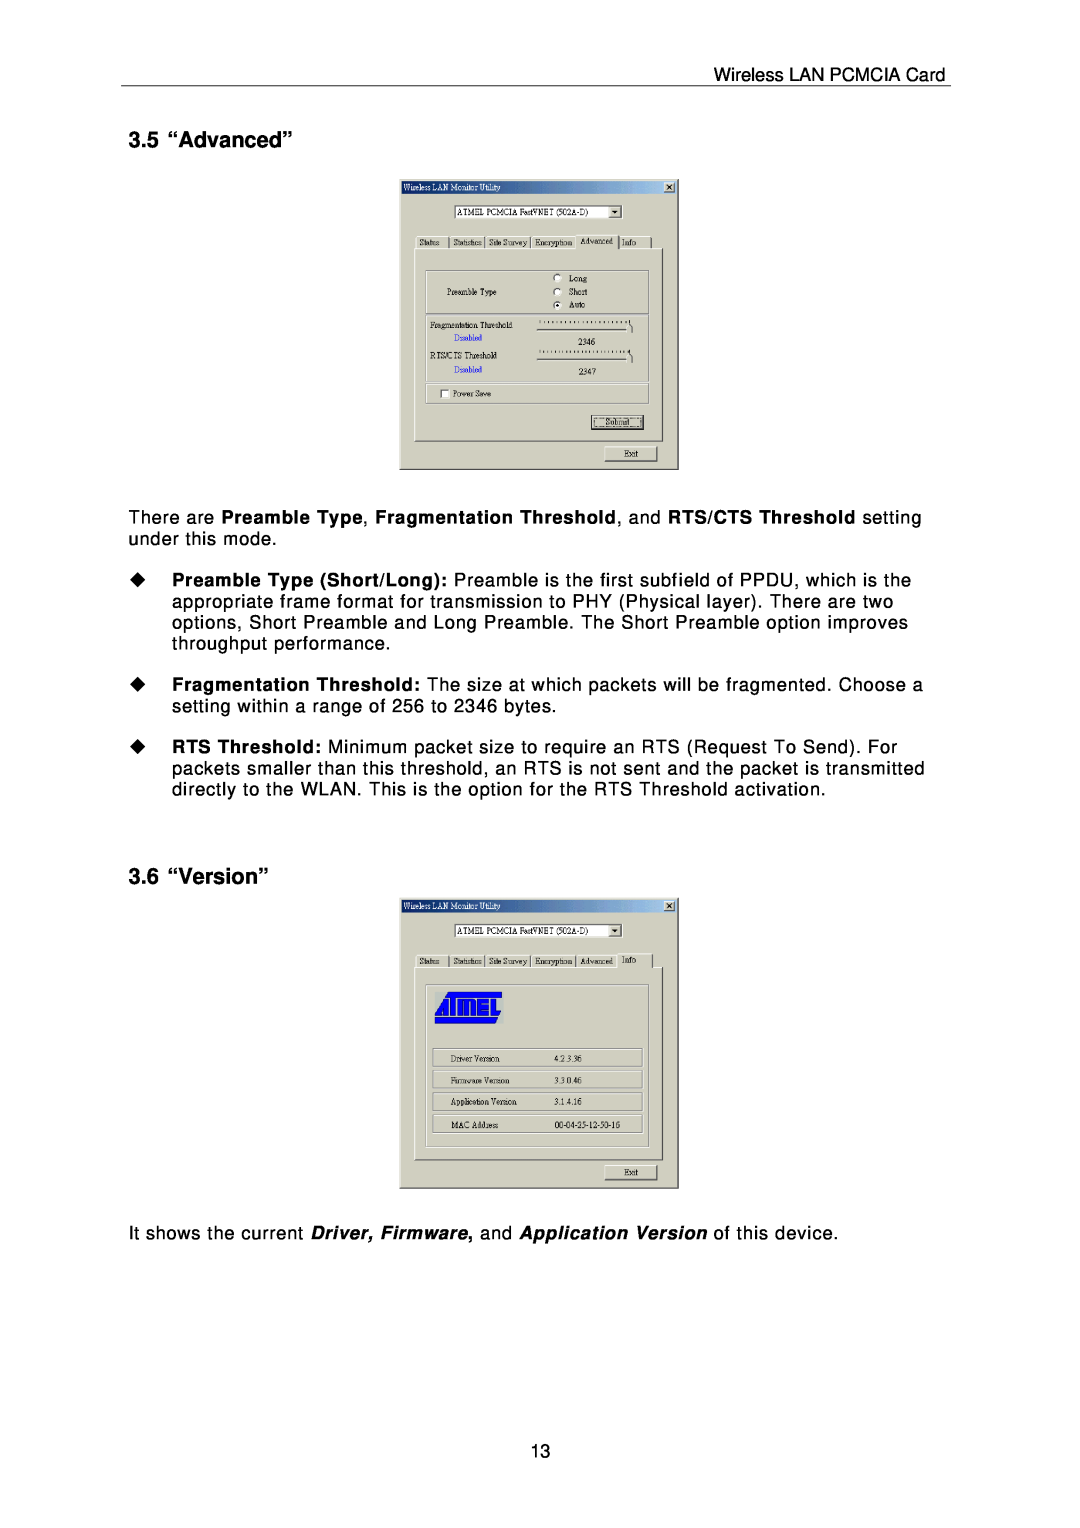 IBM PCMCIA Card user manual 3.5 “Advanced”, 3.6 “Version” 